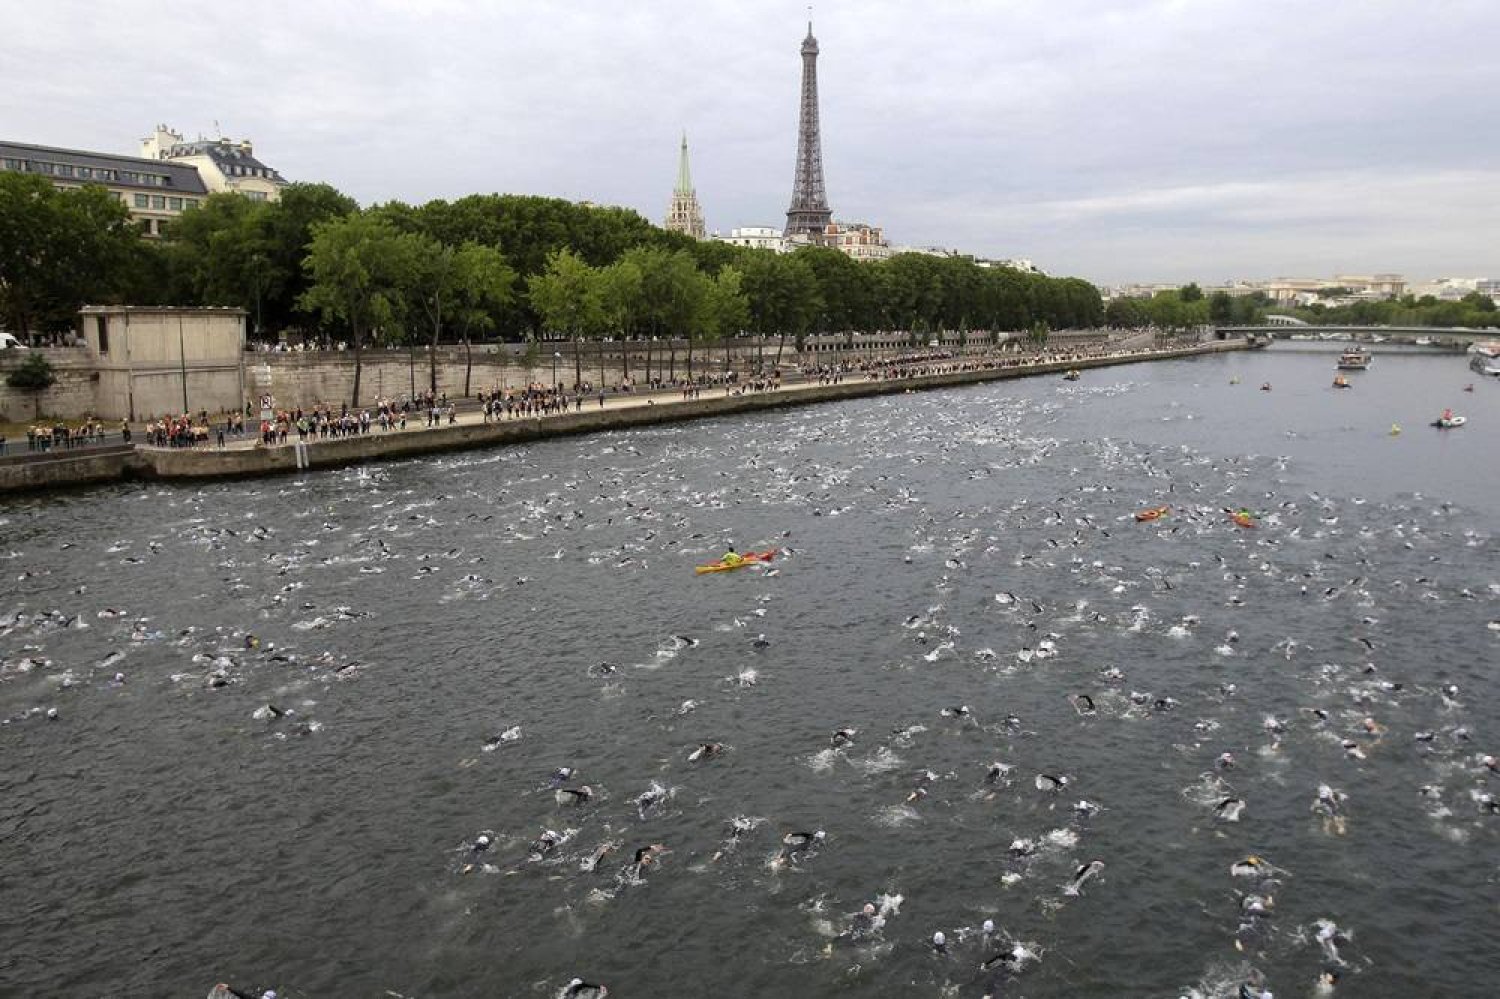 Competitors swim in the Seine River during the Paris Triathlon competition in Paris Sunday, July 10, 2011. (AP) 